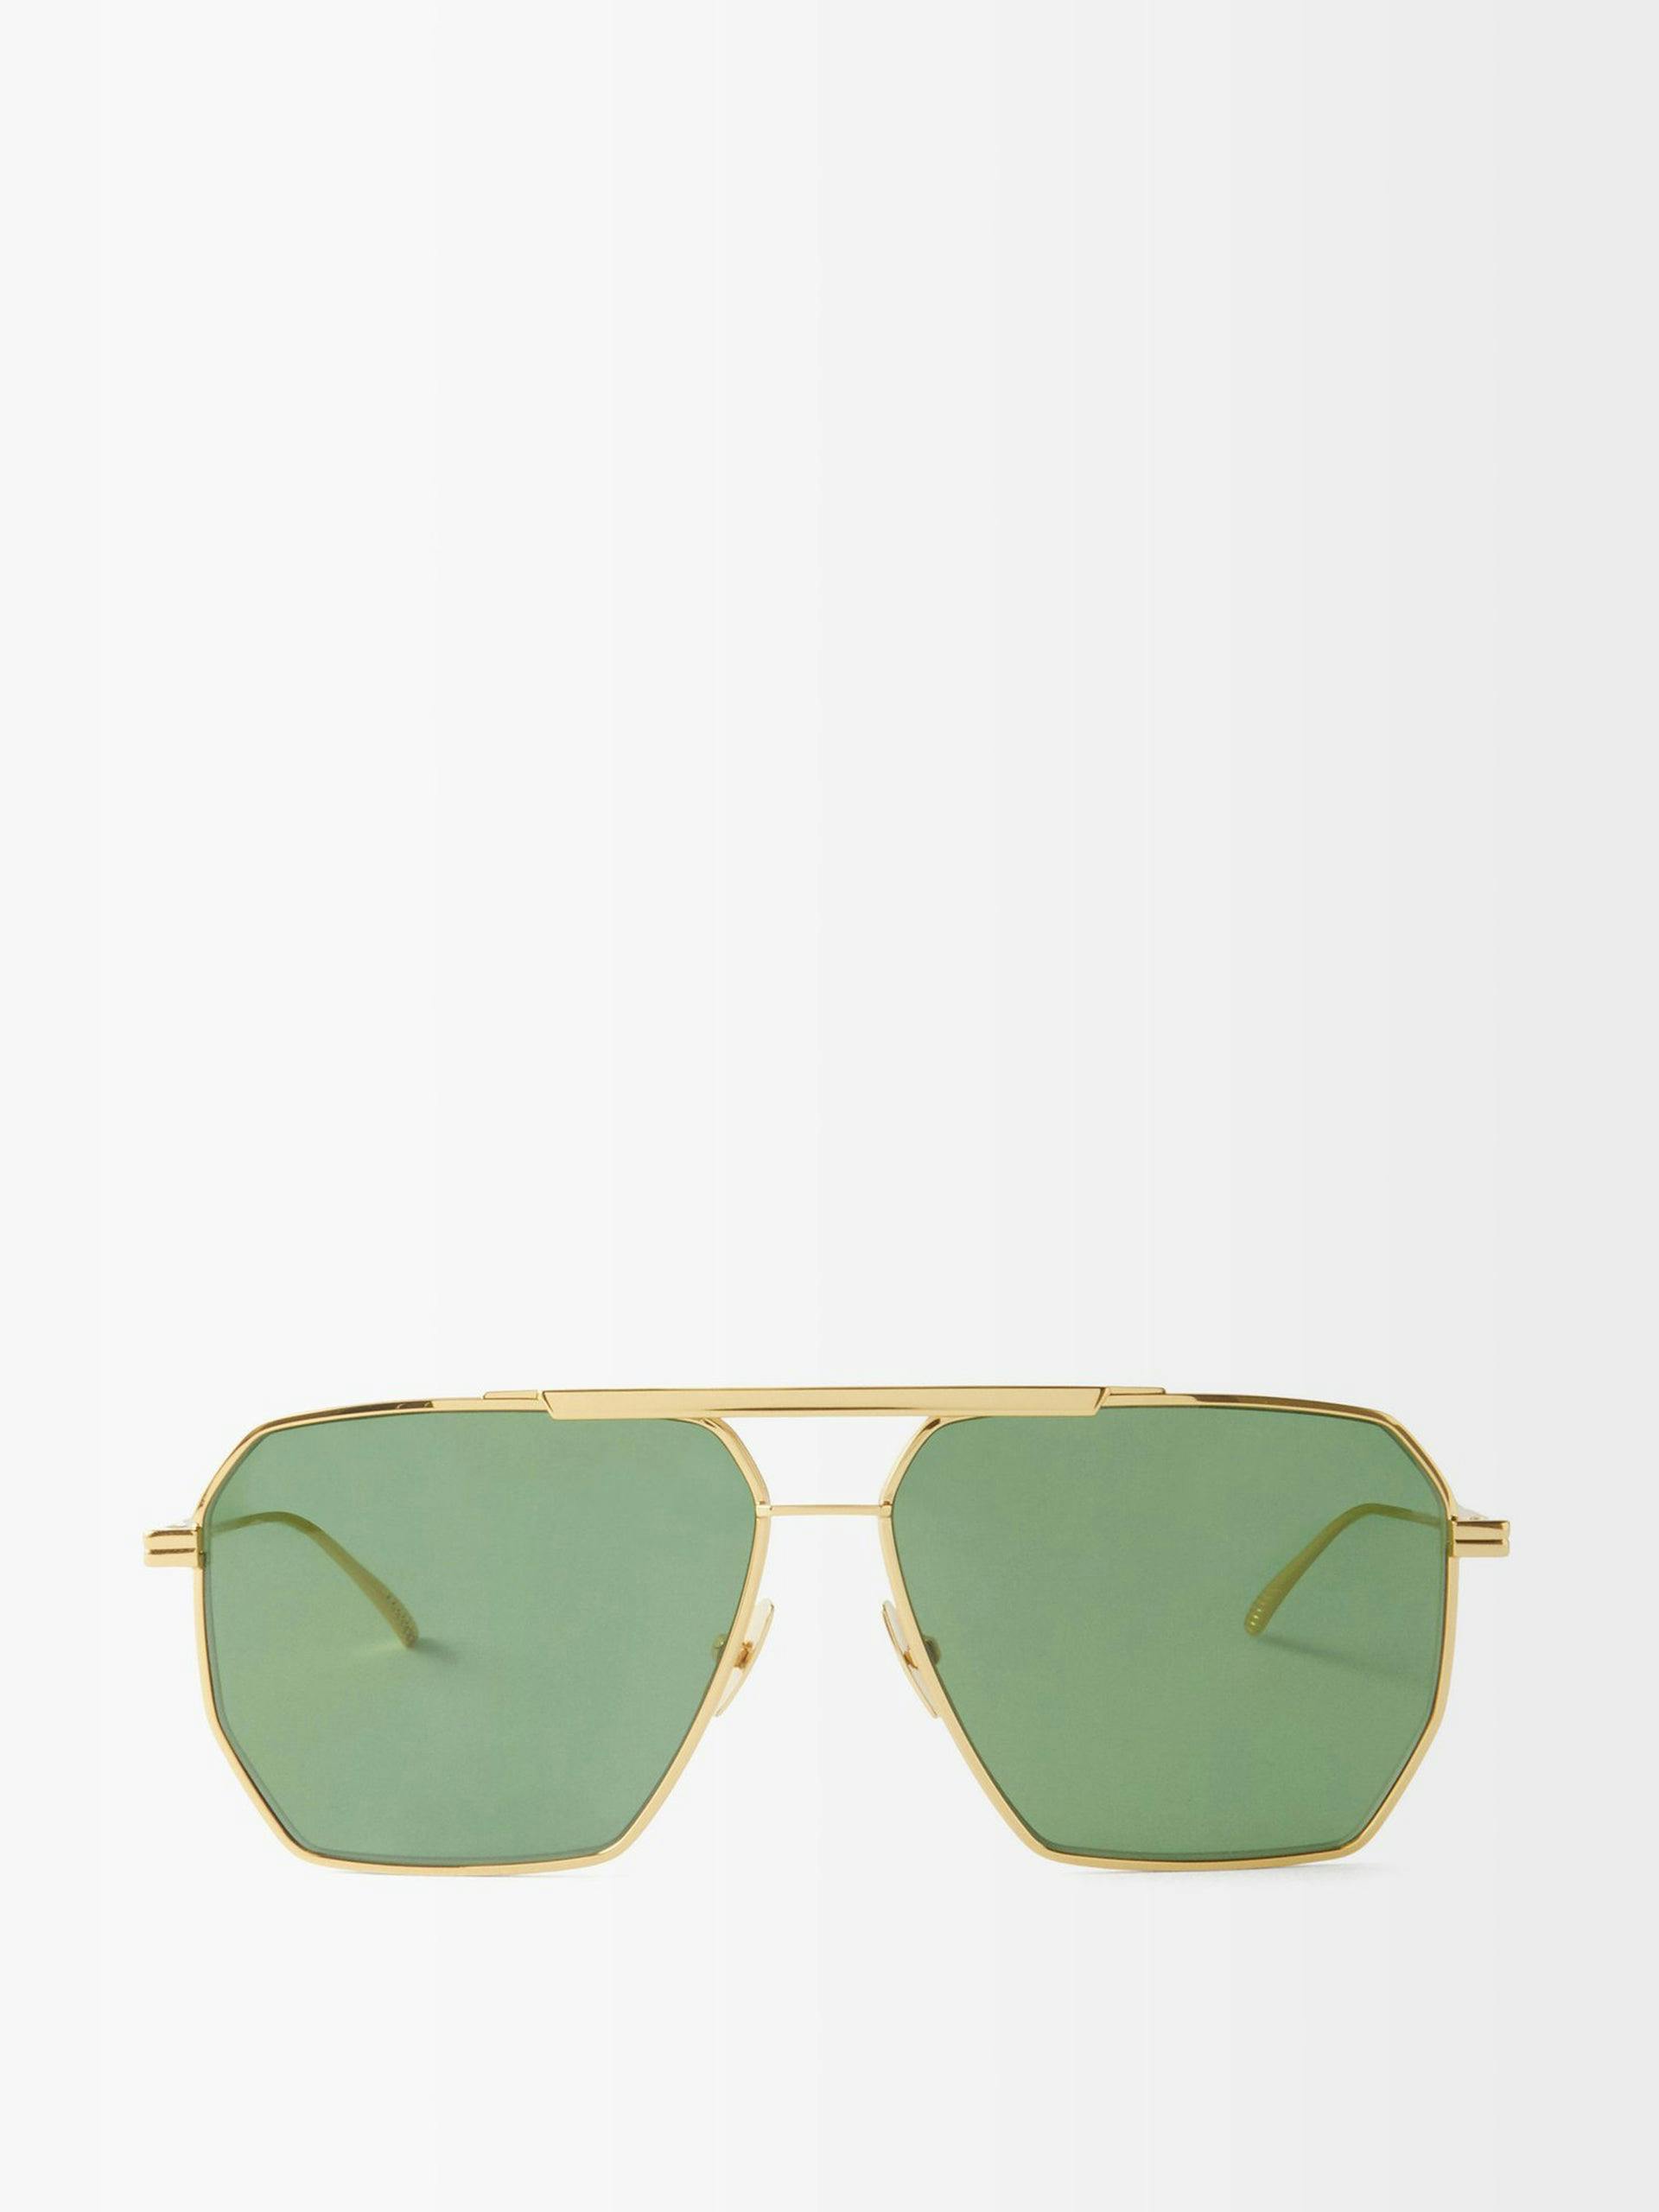 Gold aviator metal sunglasses